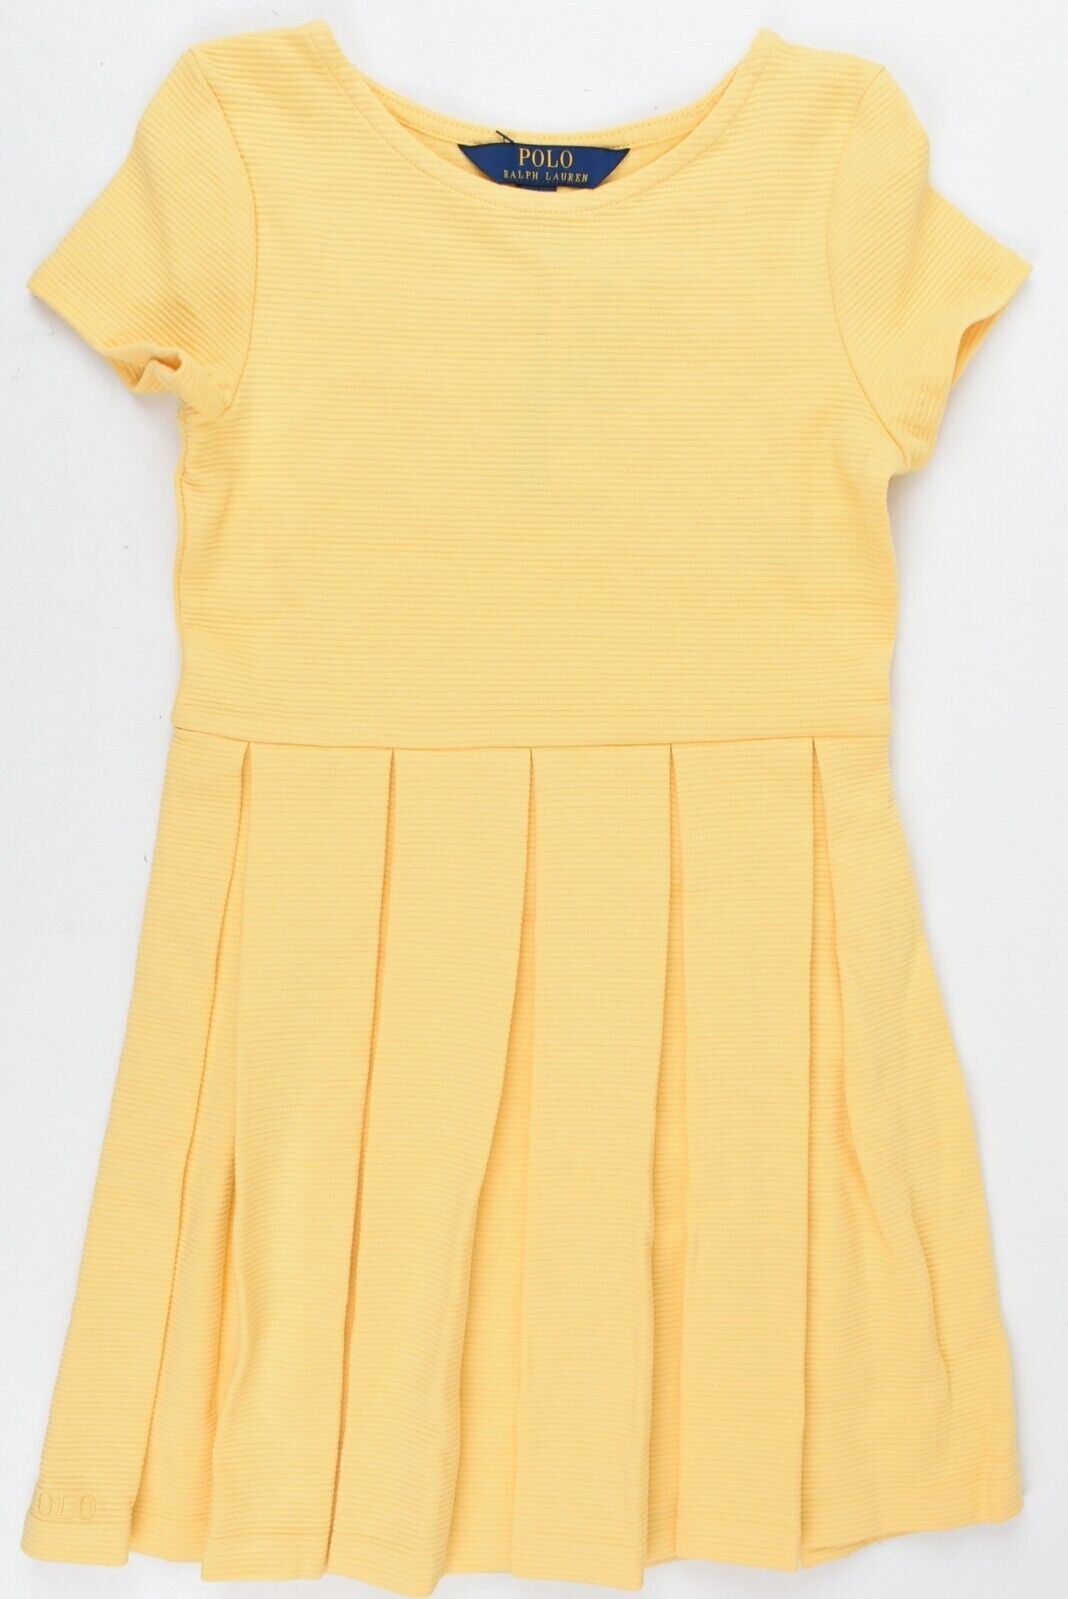 POLO RALPH LAUREN Girls Kids Rib Knit Skater Dress, Yellow, size 6-7 years